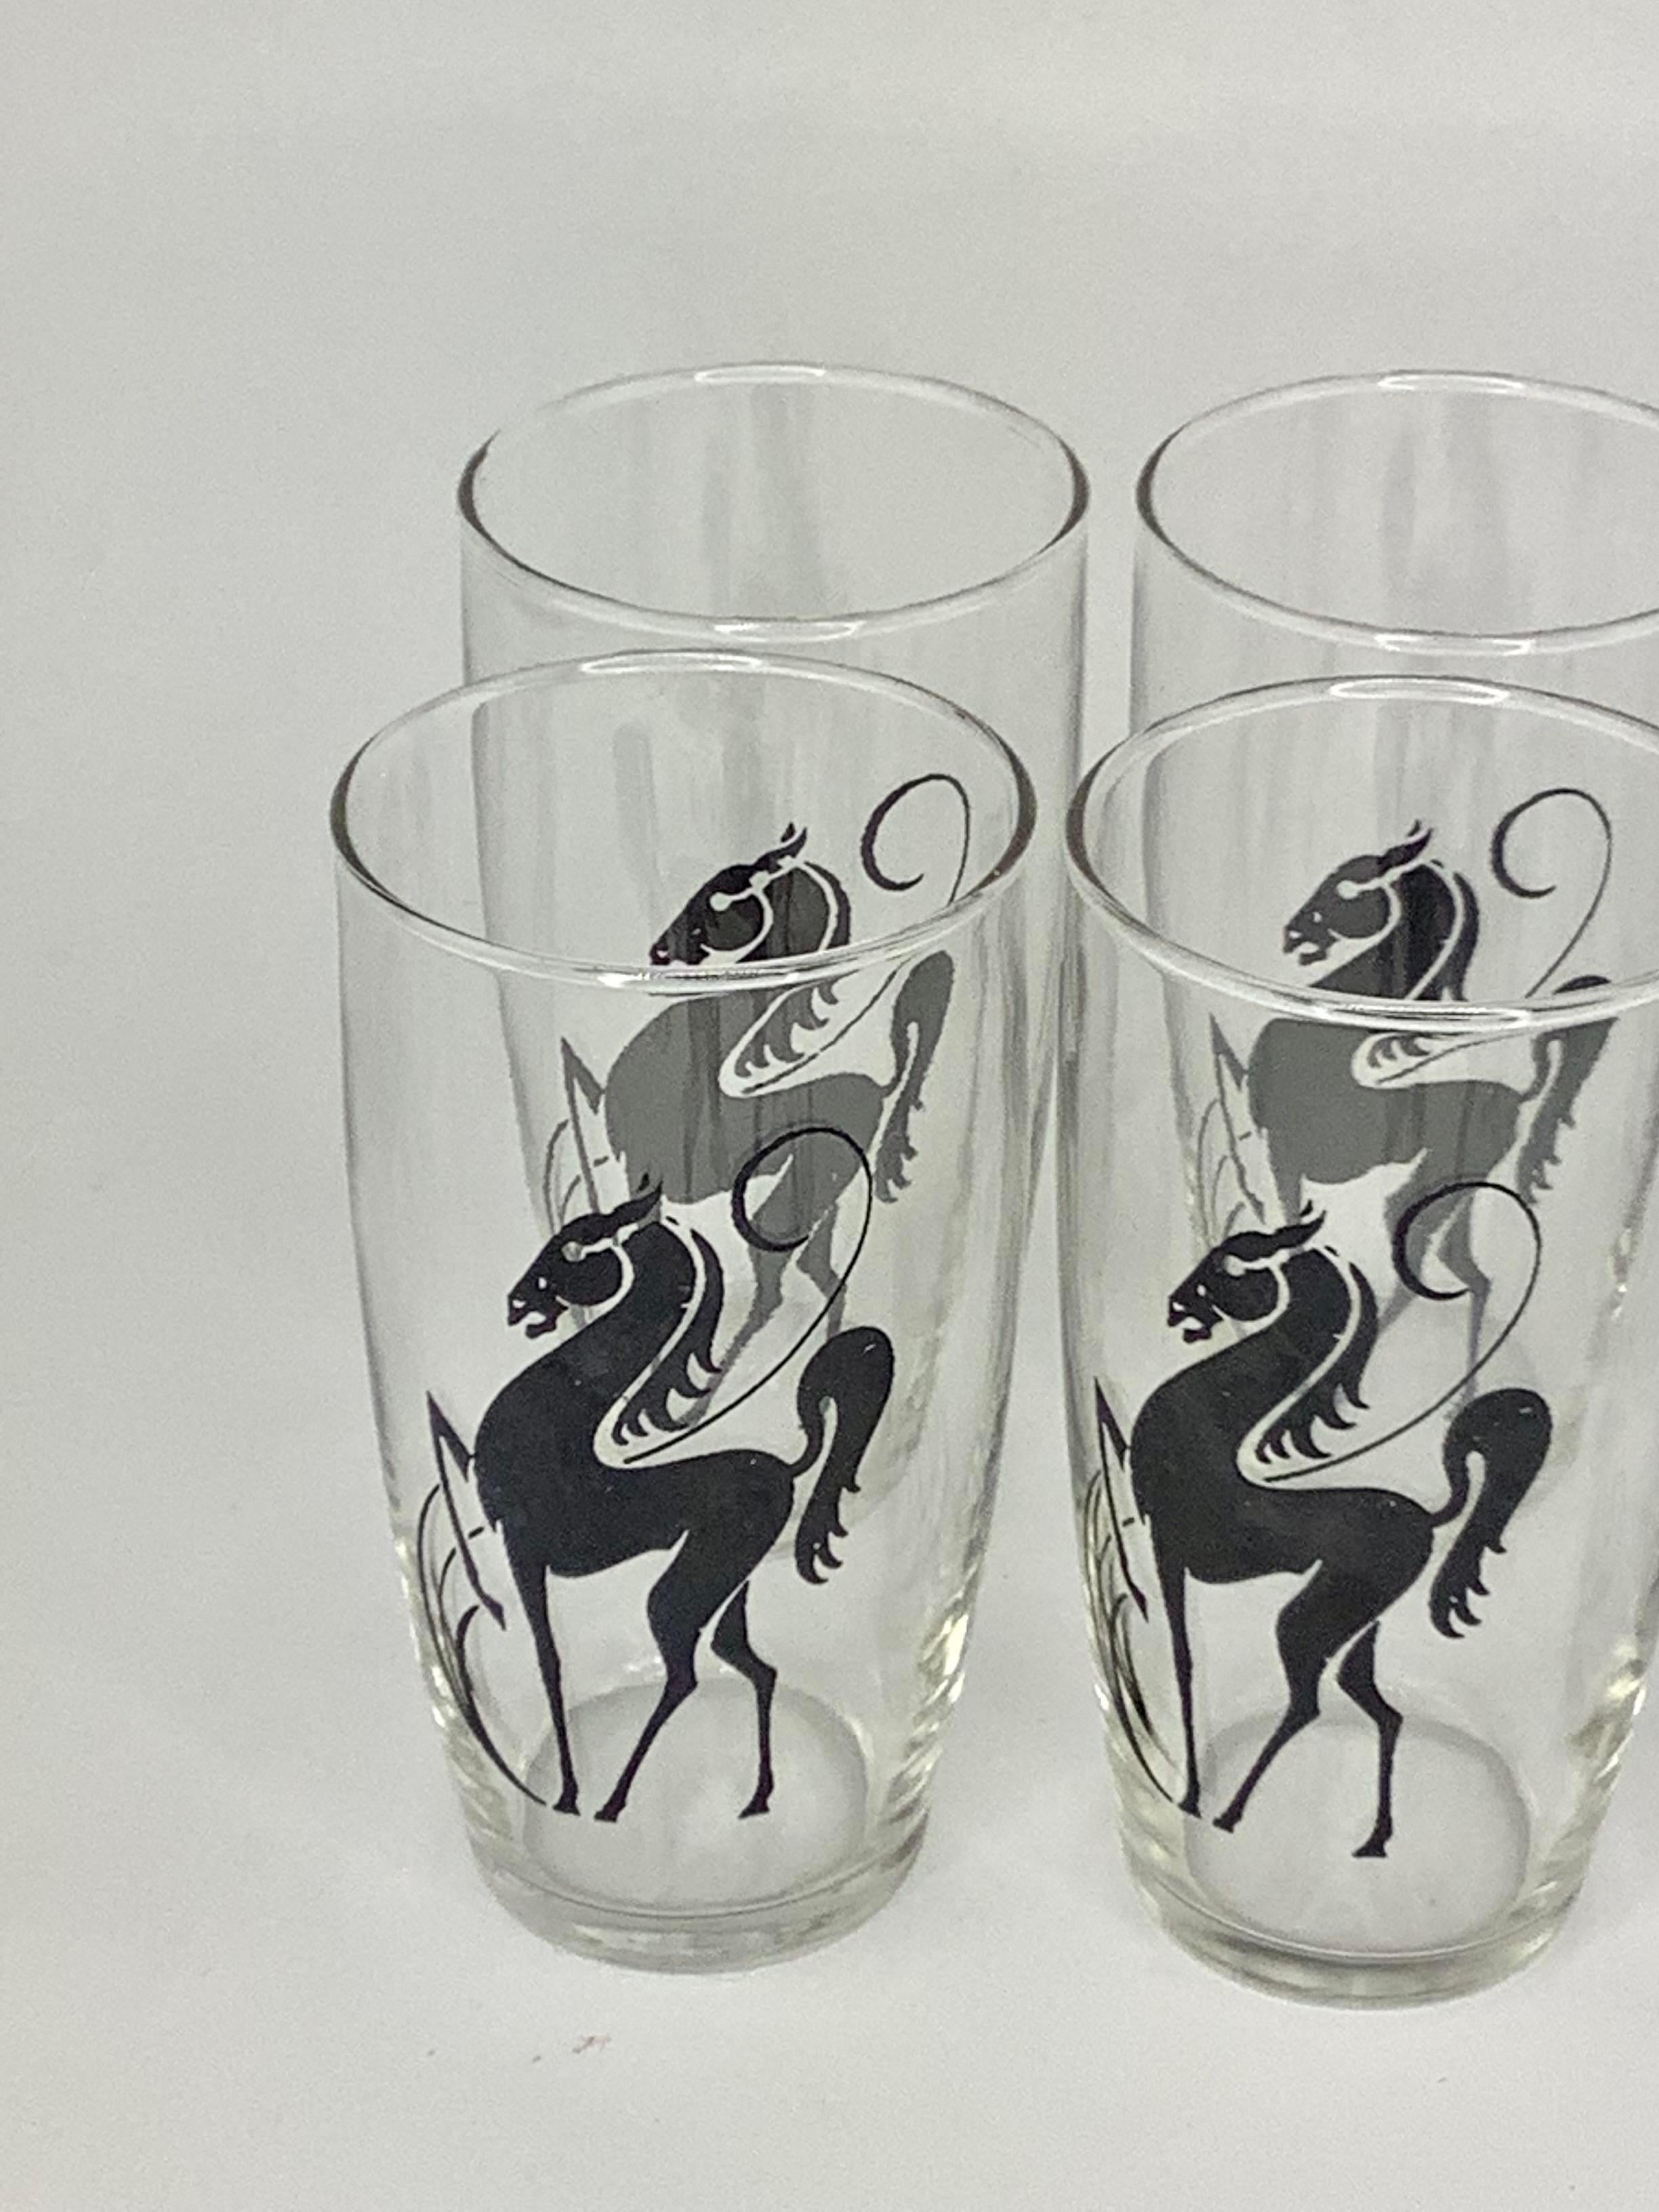 Set of 8 Vintage Highball Glasses decorated with Elegant Black Prancing Horses. Glasses measure 2 3/4